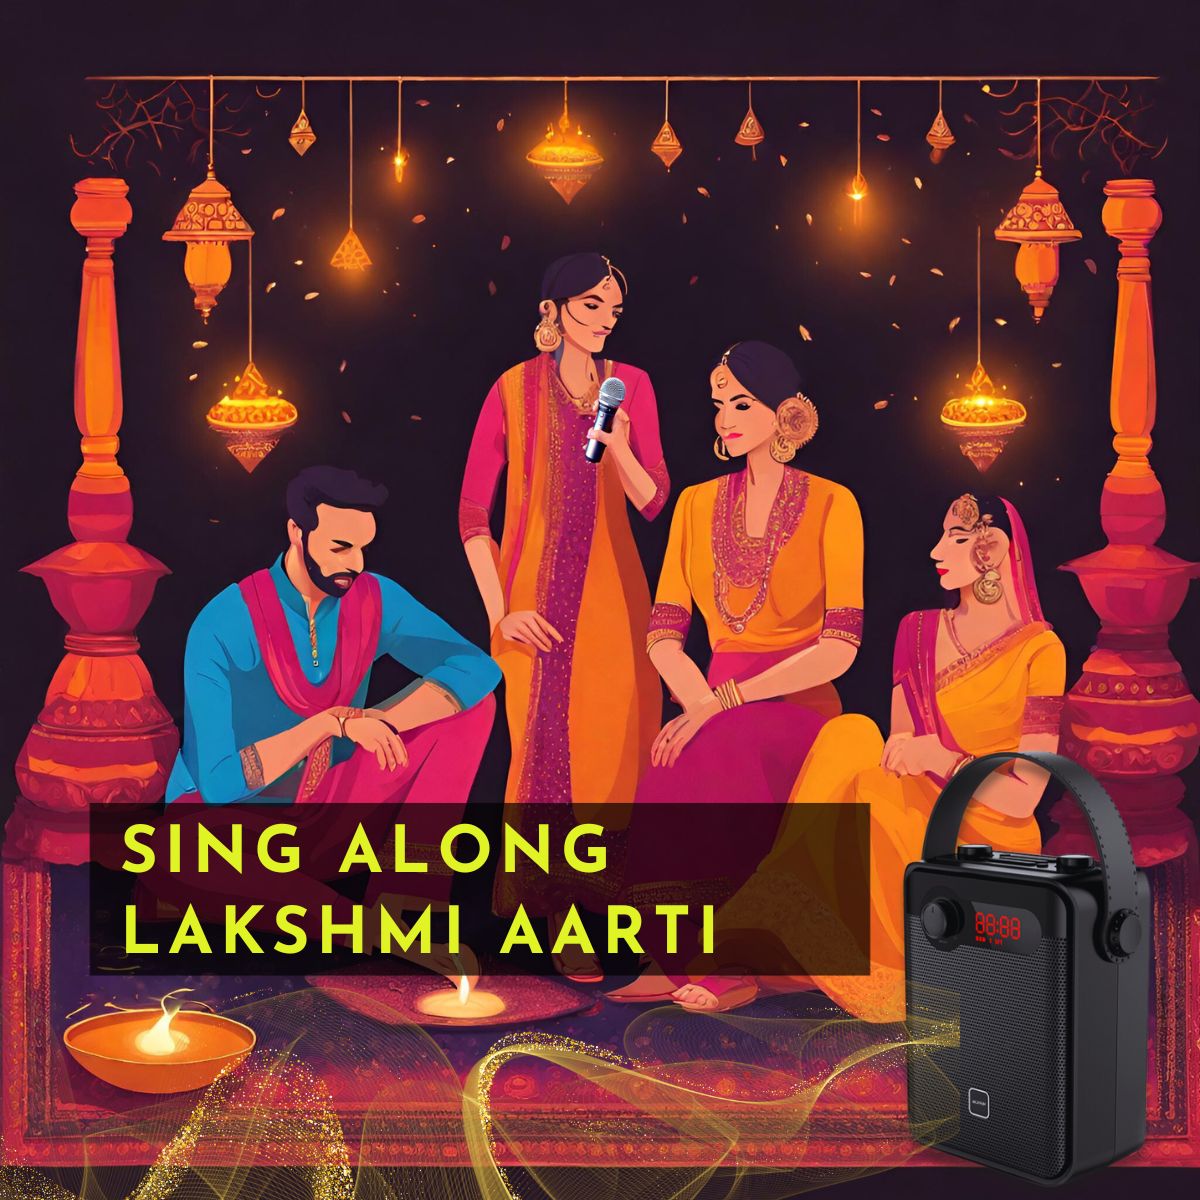 Diwali Gift Ideas for India: Portable Karaoke System for Ultimate Entertainment - Nefficar